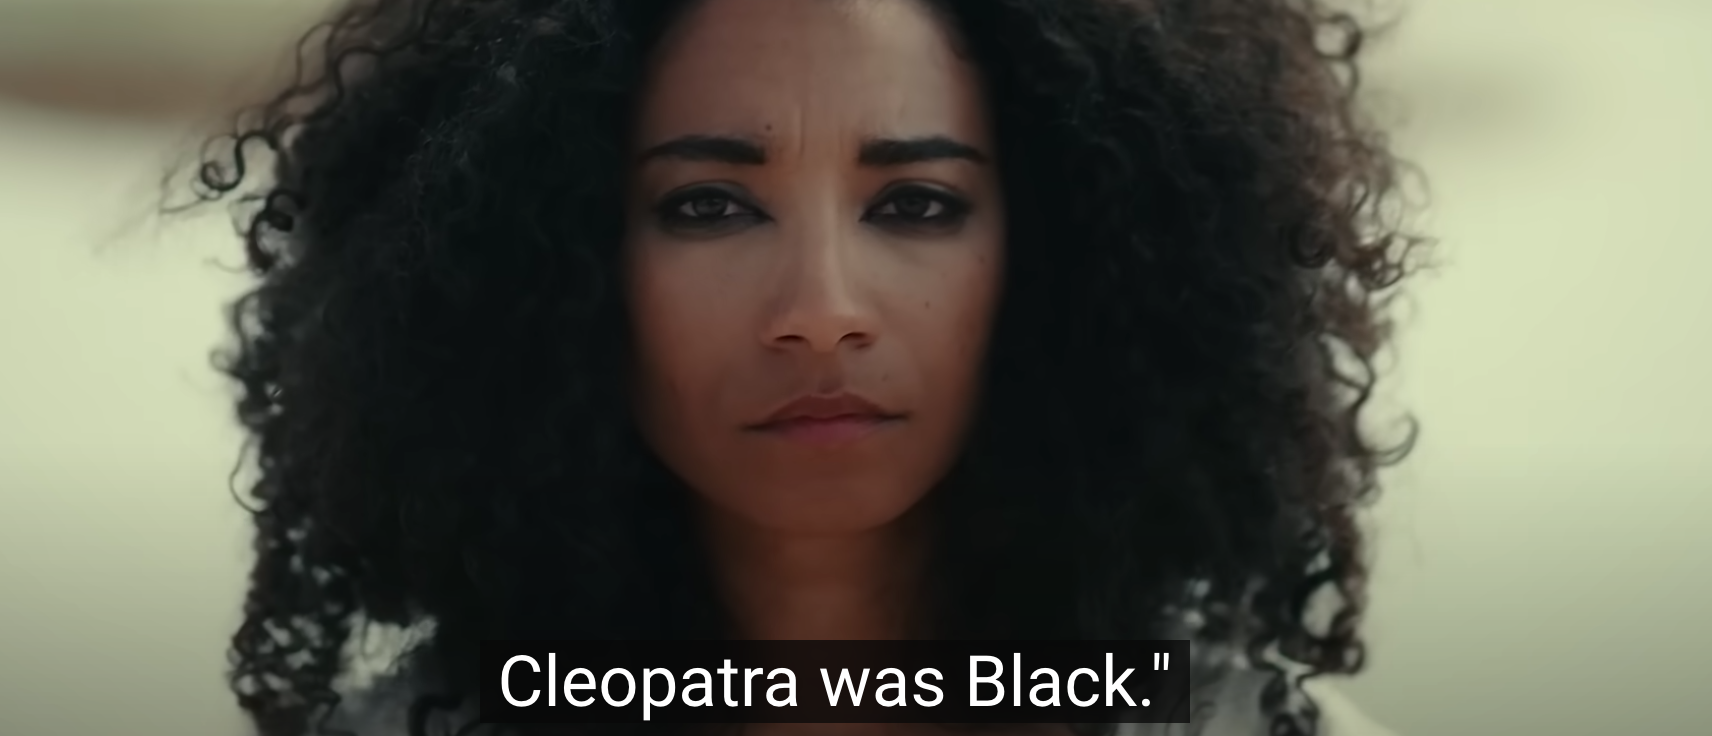 Netflix To Release Cleopatra Docuseries Depicting The Queen As Black